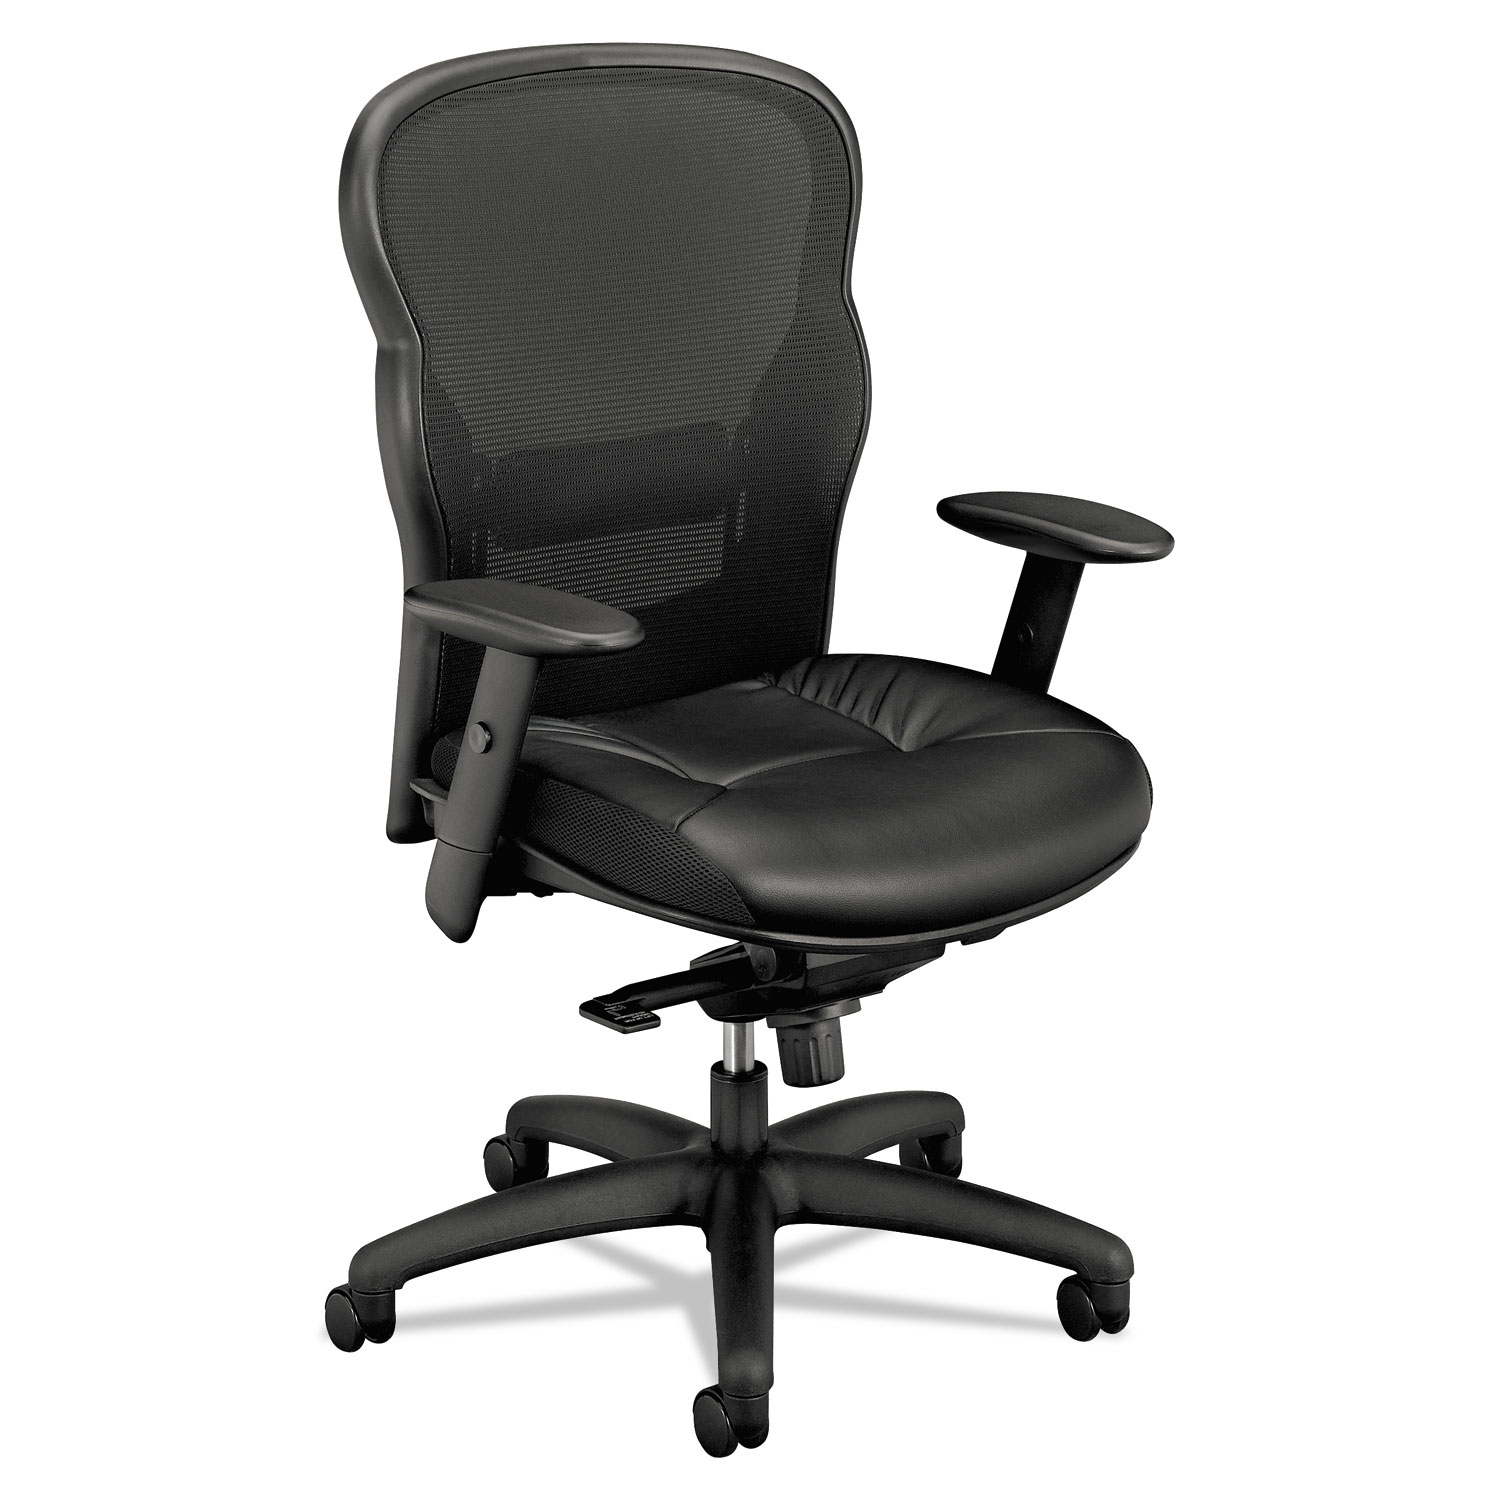  HON HVL701.SB11 Wave Mesh High-Back Task Chair, Supports up to 250 lbs., Black Seat/Black Back, Black Base (BSXVL701SB11) 